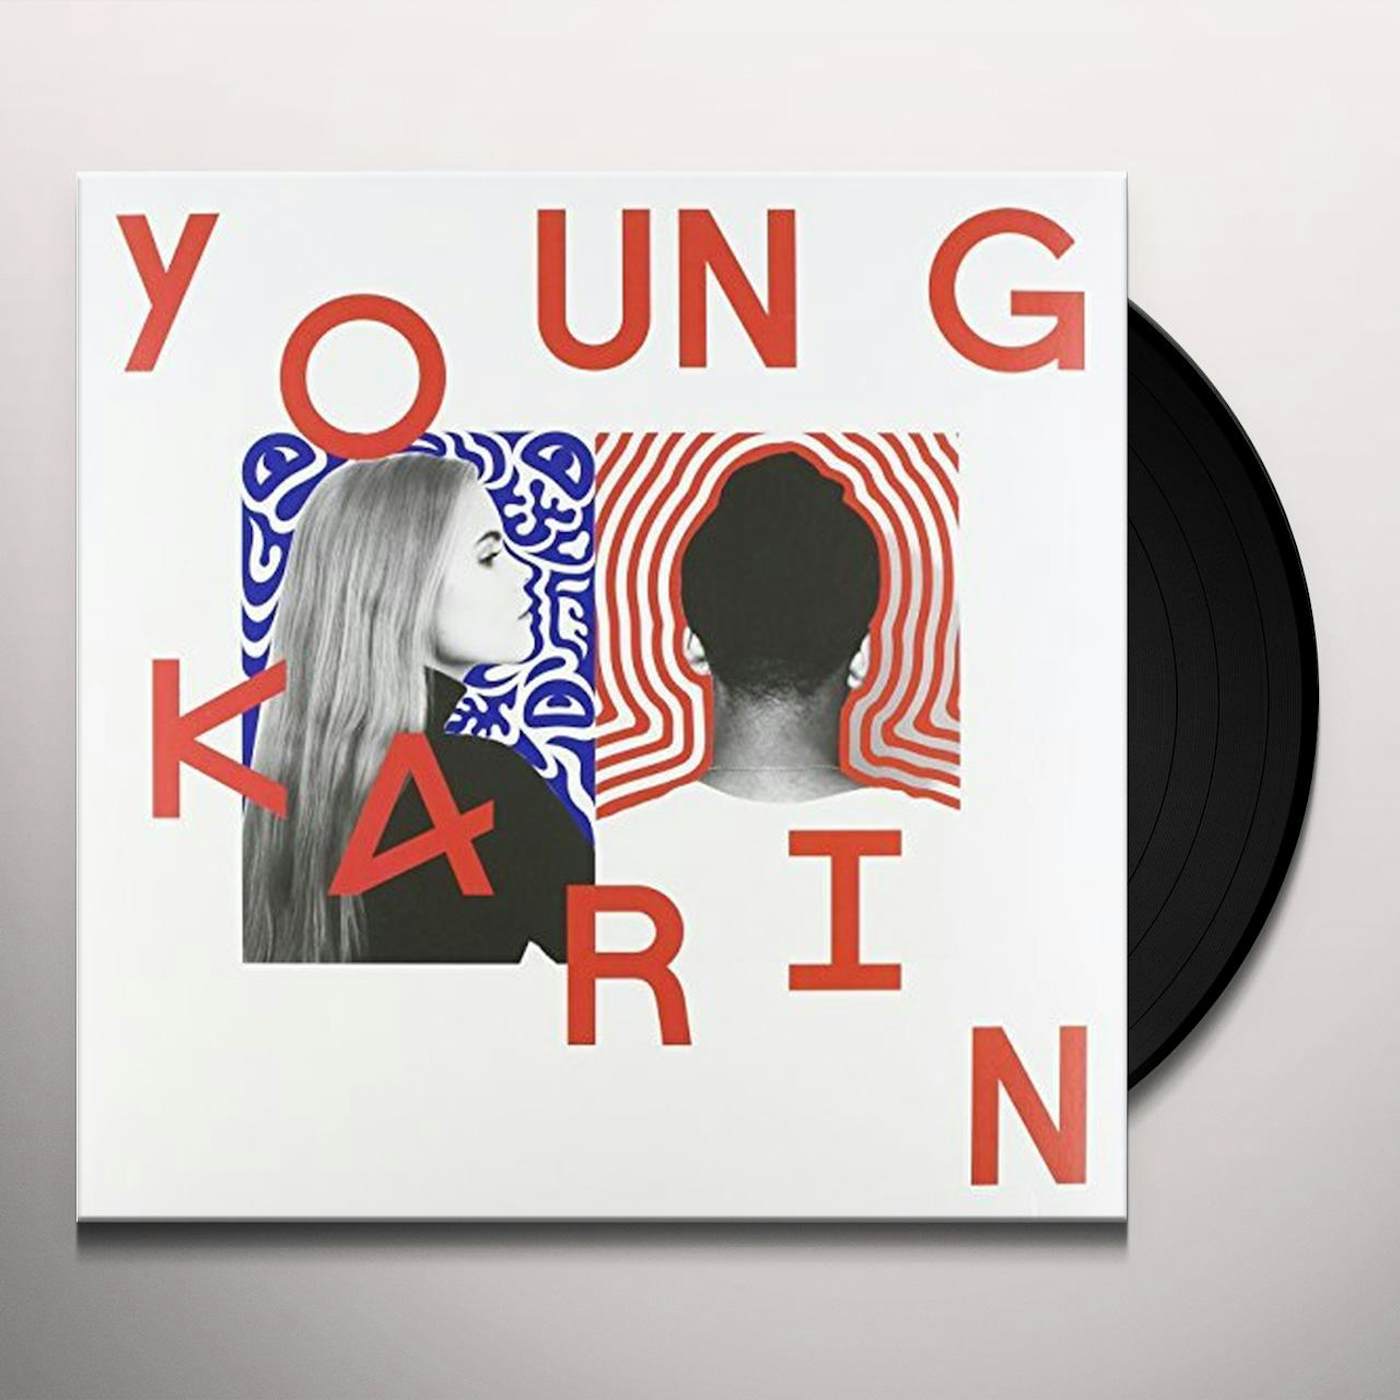 Young Karin N1 Vinyl Record